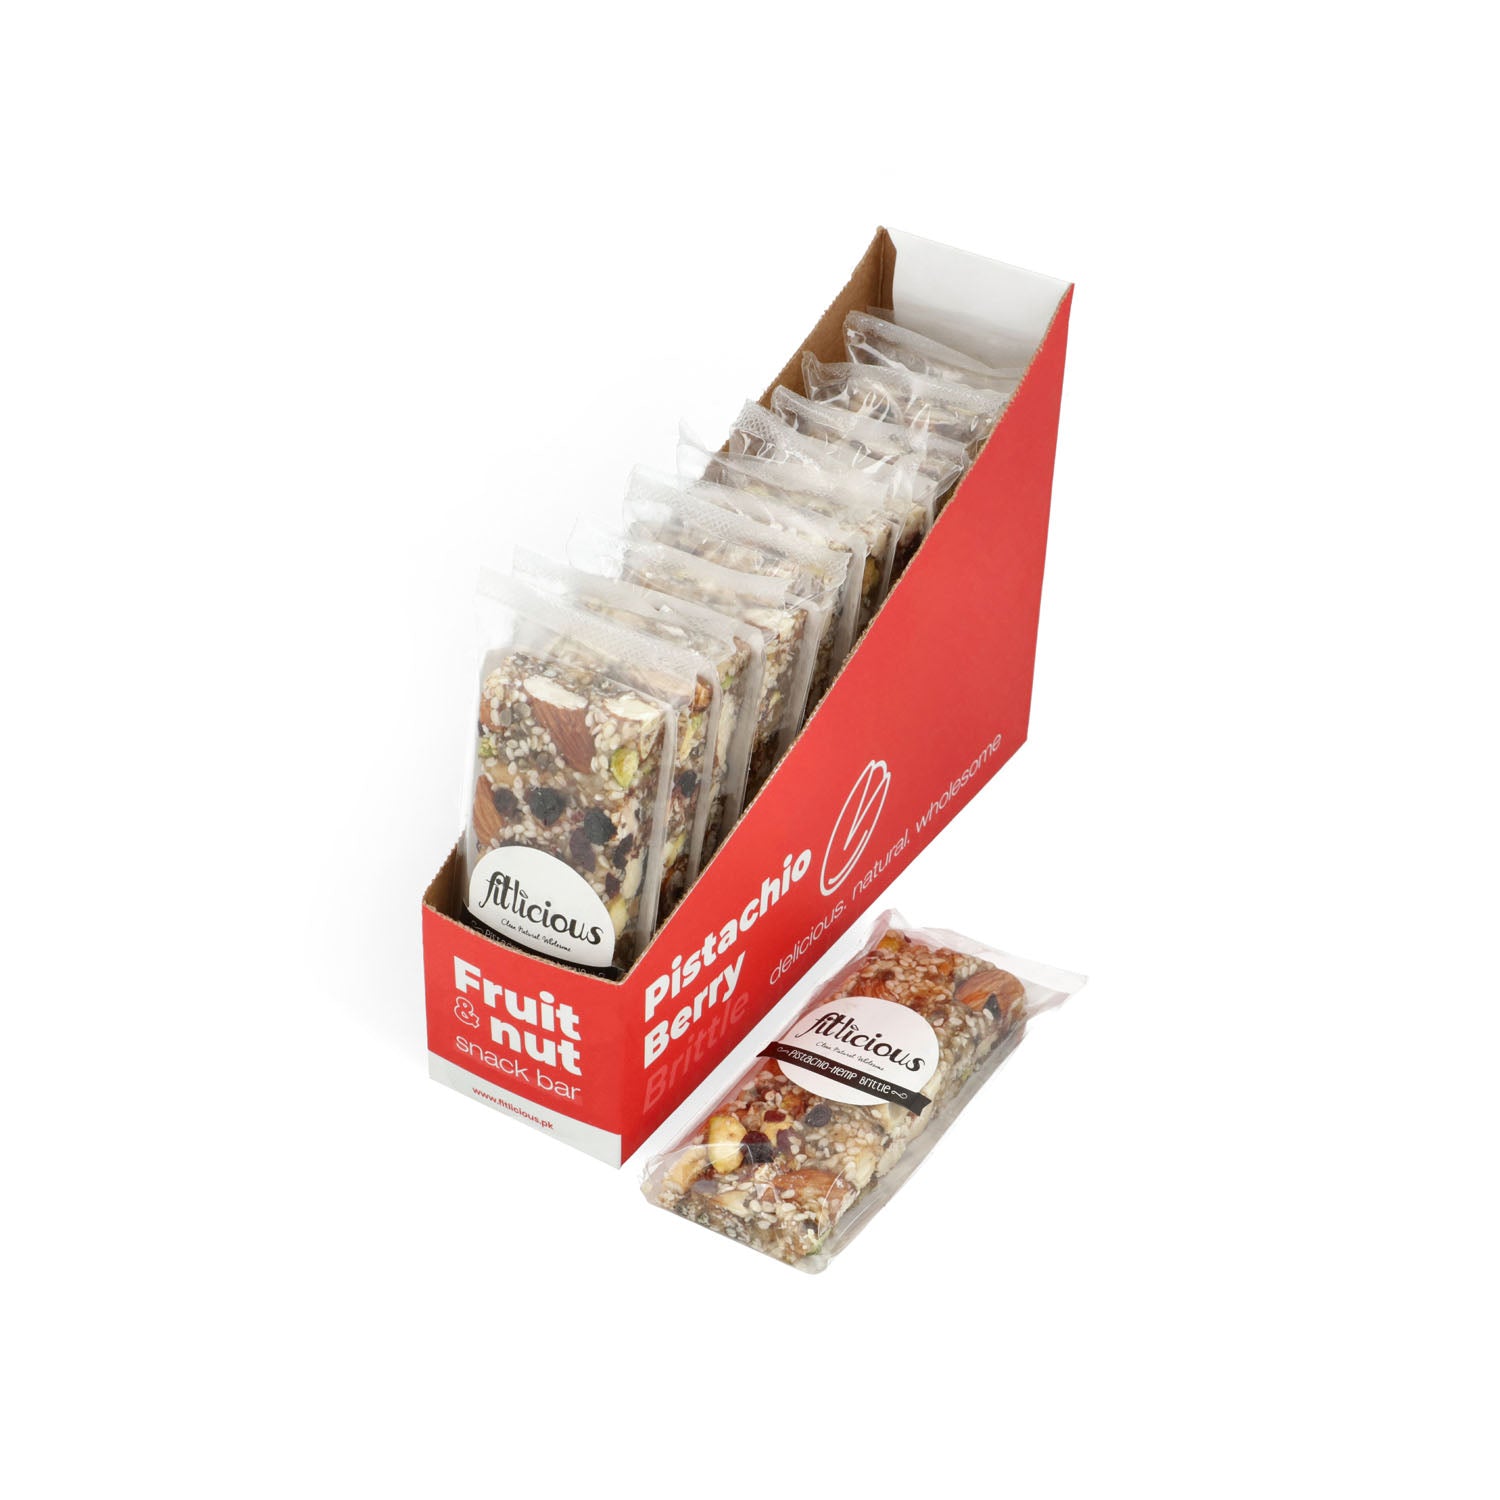 Pistachio Berry Nut bar (box of 12)